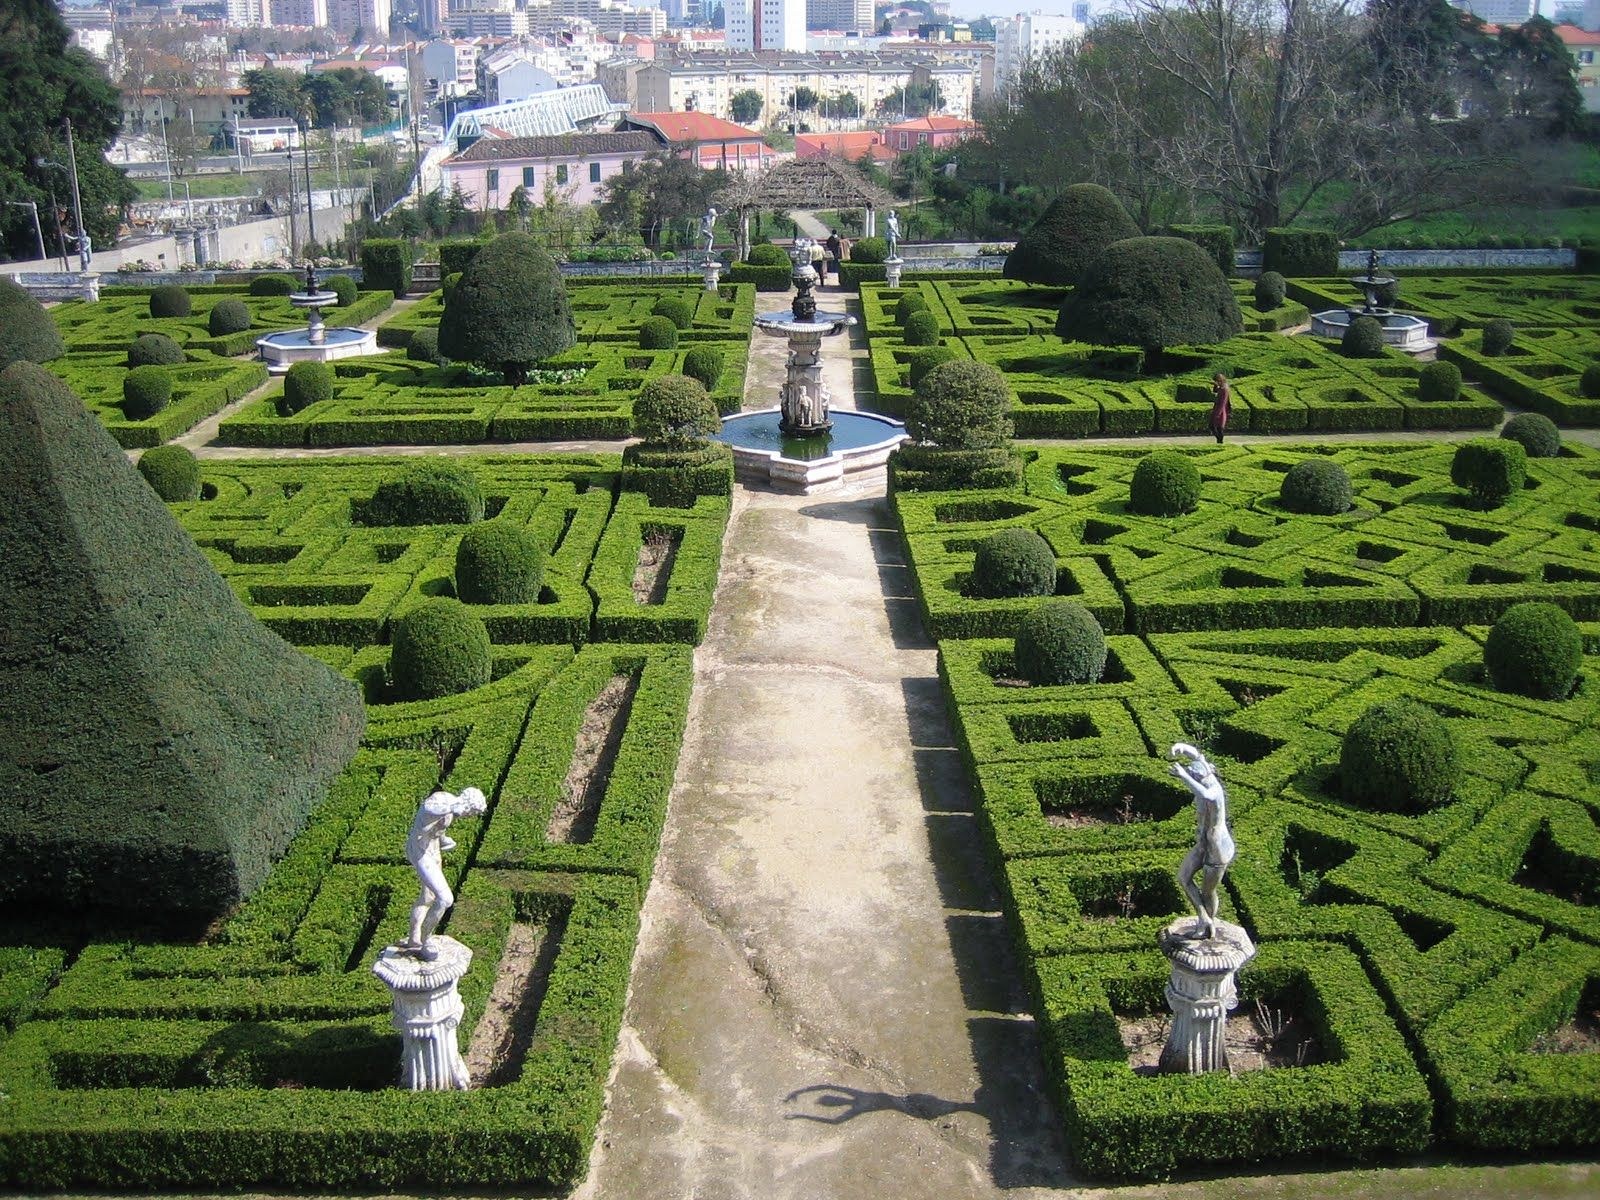 Верховой сад. Дворец маркиза Фронтейра в Лиссабоне. Португалия сад маркиза де Фронтейра. Сад и дворец маркиза де Фронтейра. Португалия дворец Фронтейра.